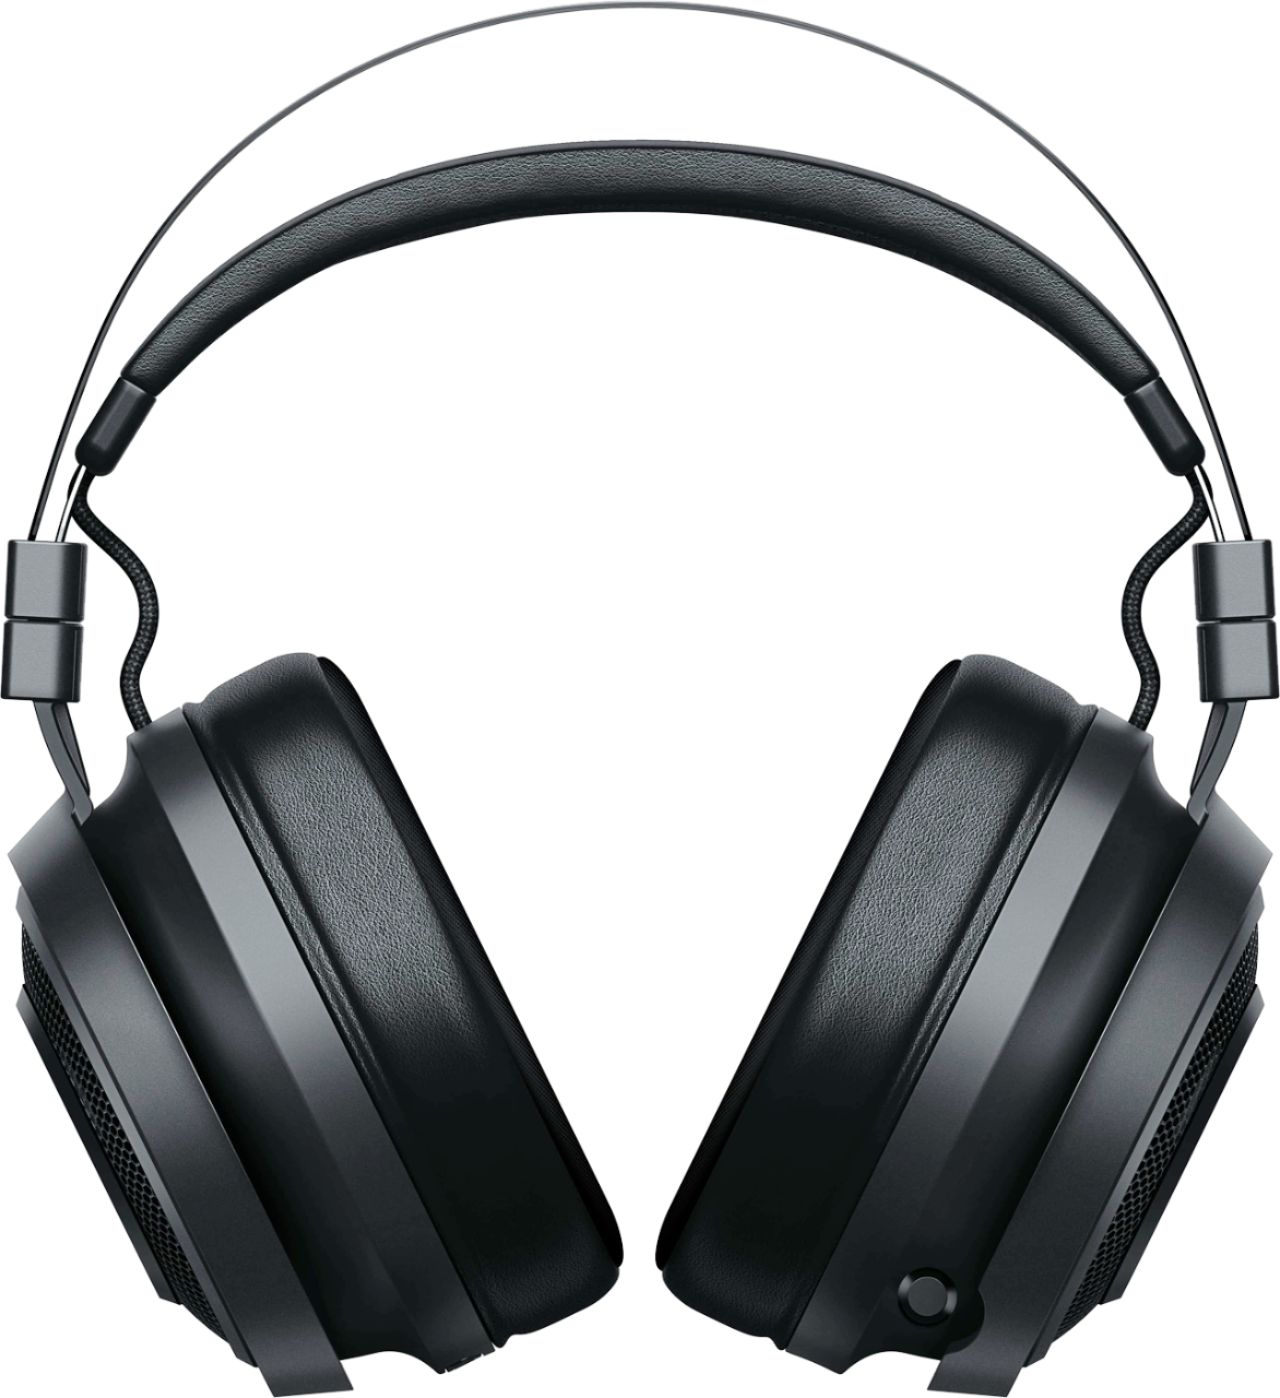 Razer Nari Wireless Thx Spatial Audio Gaming Headset For Pc And Playstation 4 Black Rz04 R3u1 Best Buy